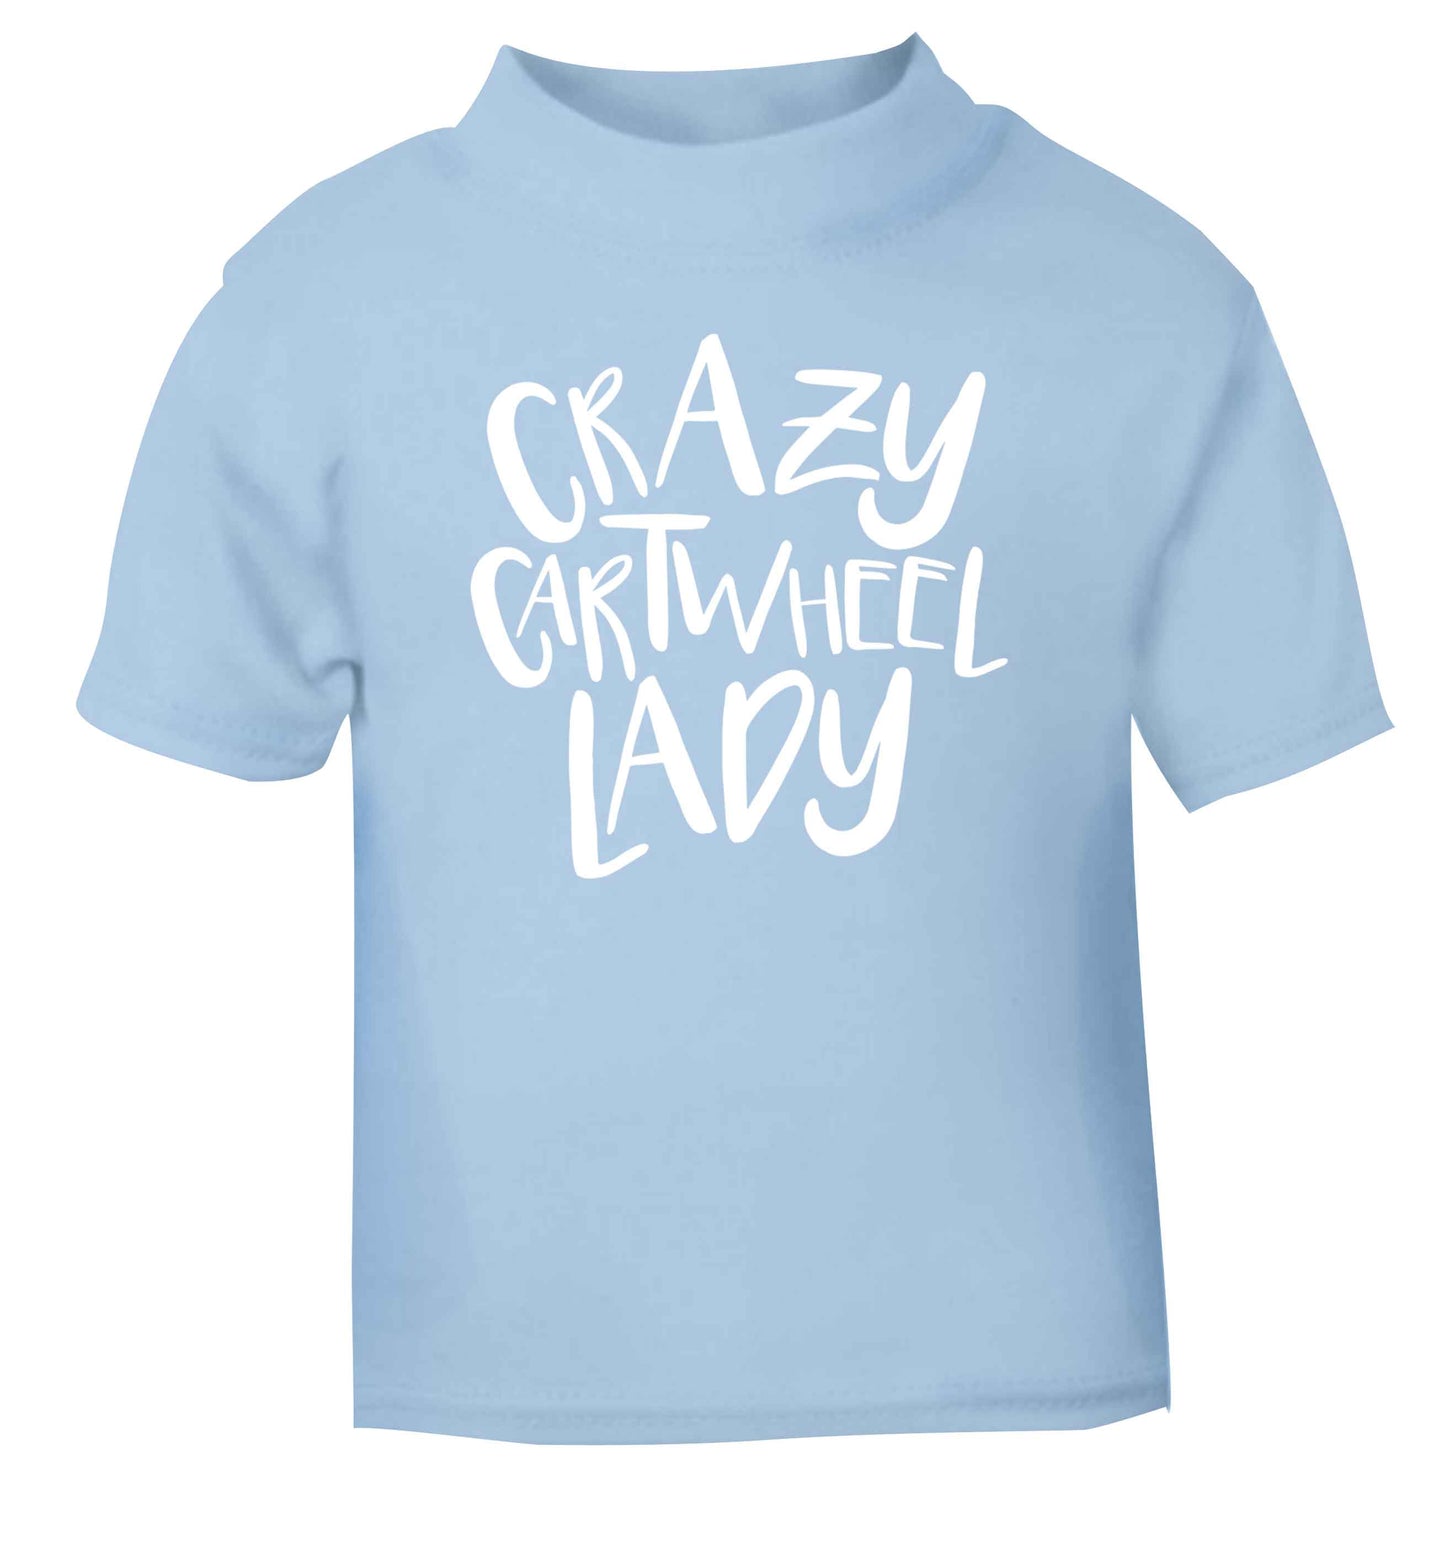 Crazy cartwheel lady light blue Baby Toddler Tshirt 2 Years